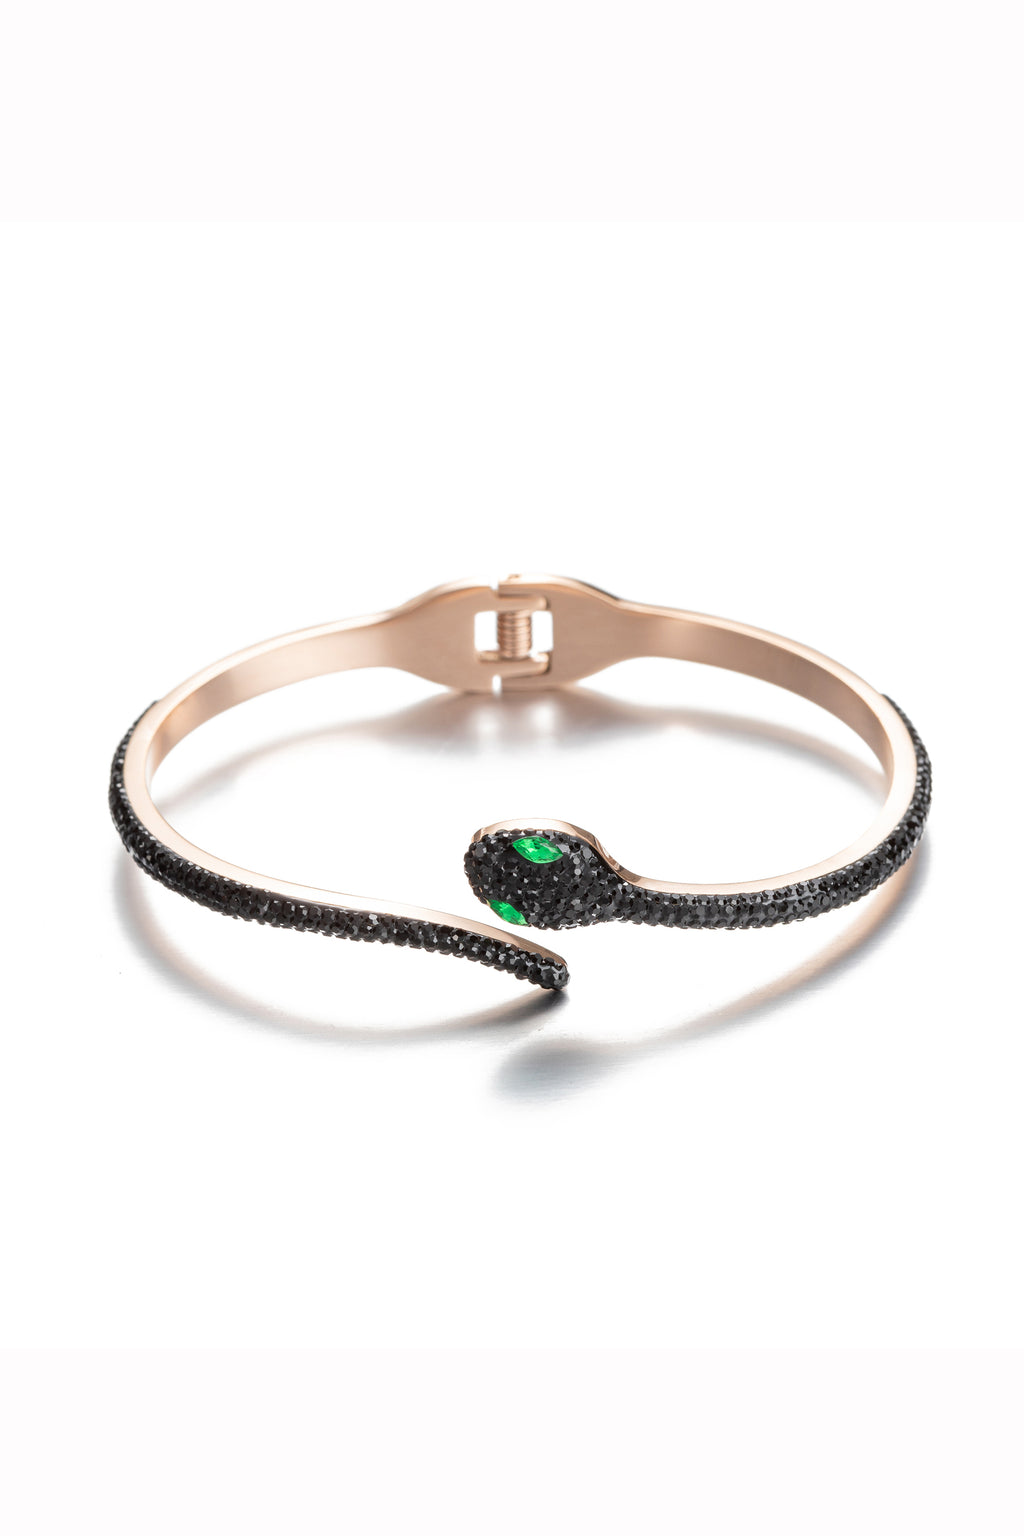 Black snake with green eyes cuff bracelet.